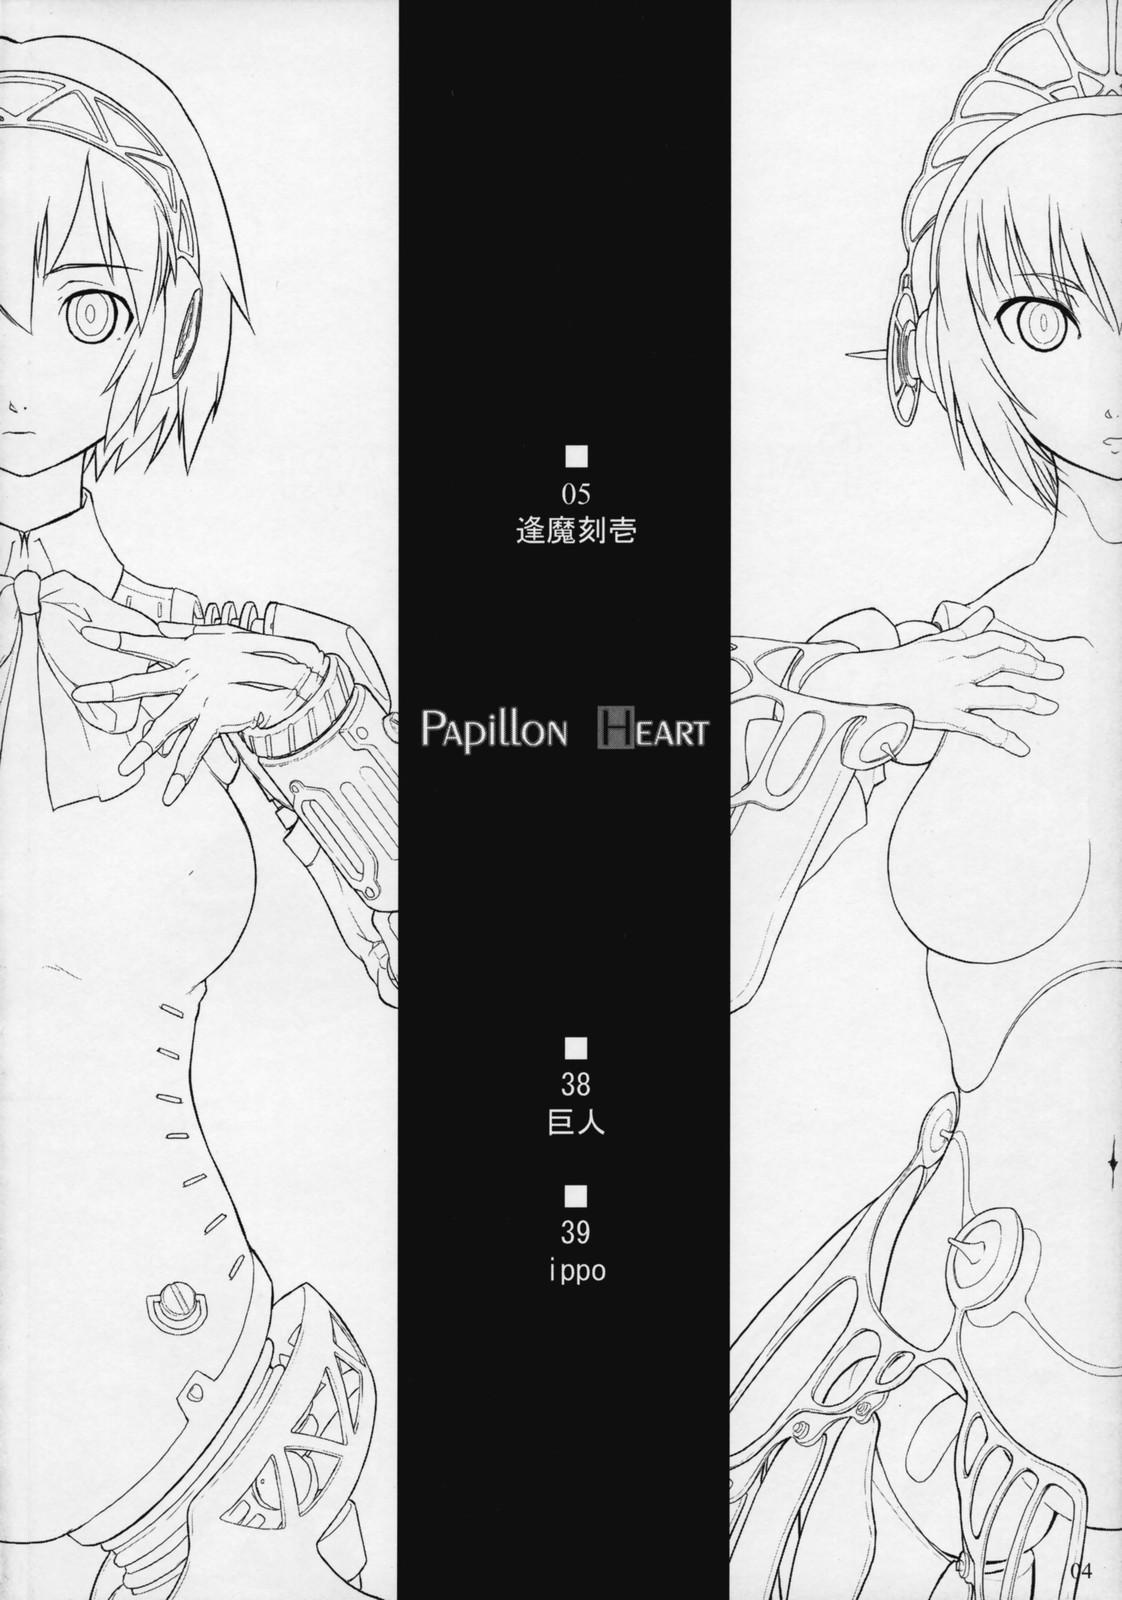 Bunduda Papillon Heart - Persona 3 Ballbusting - Page 3